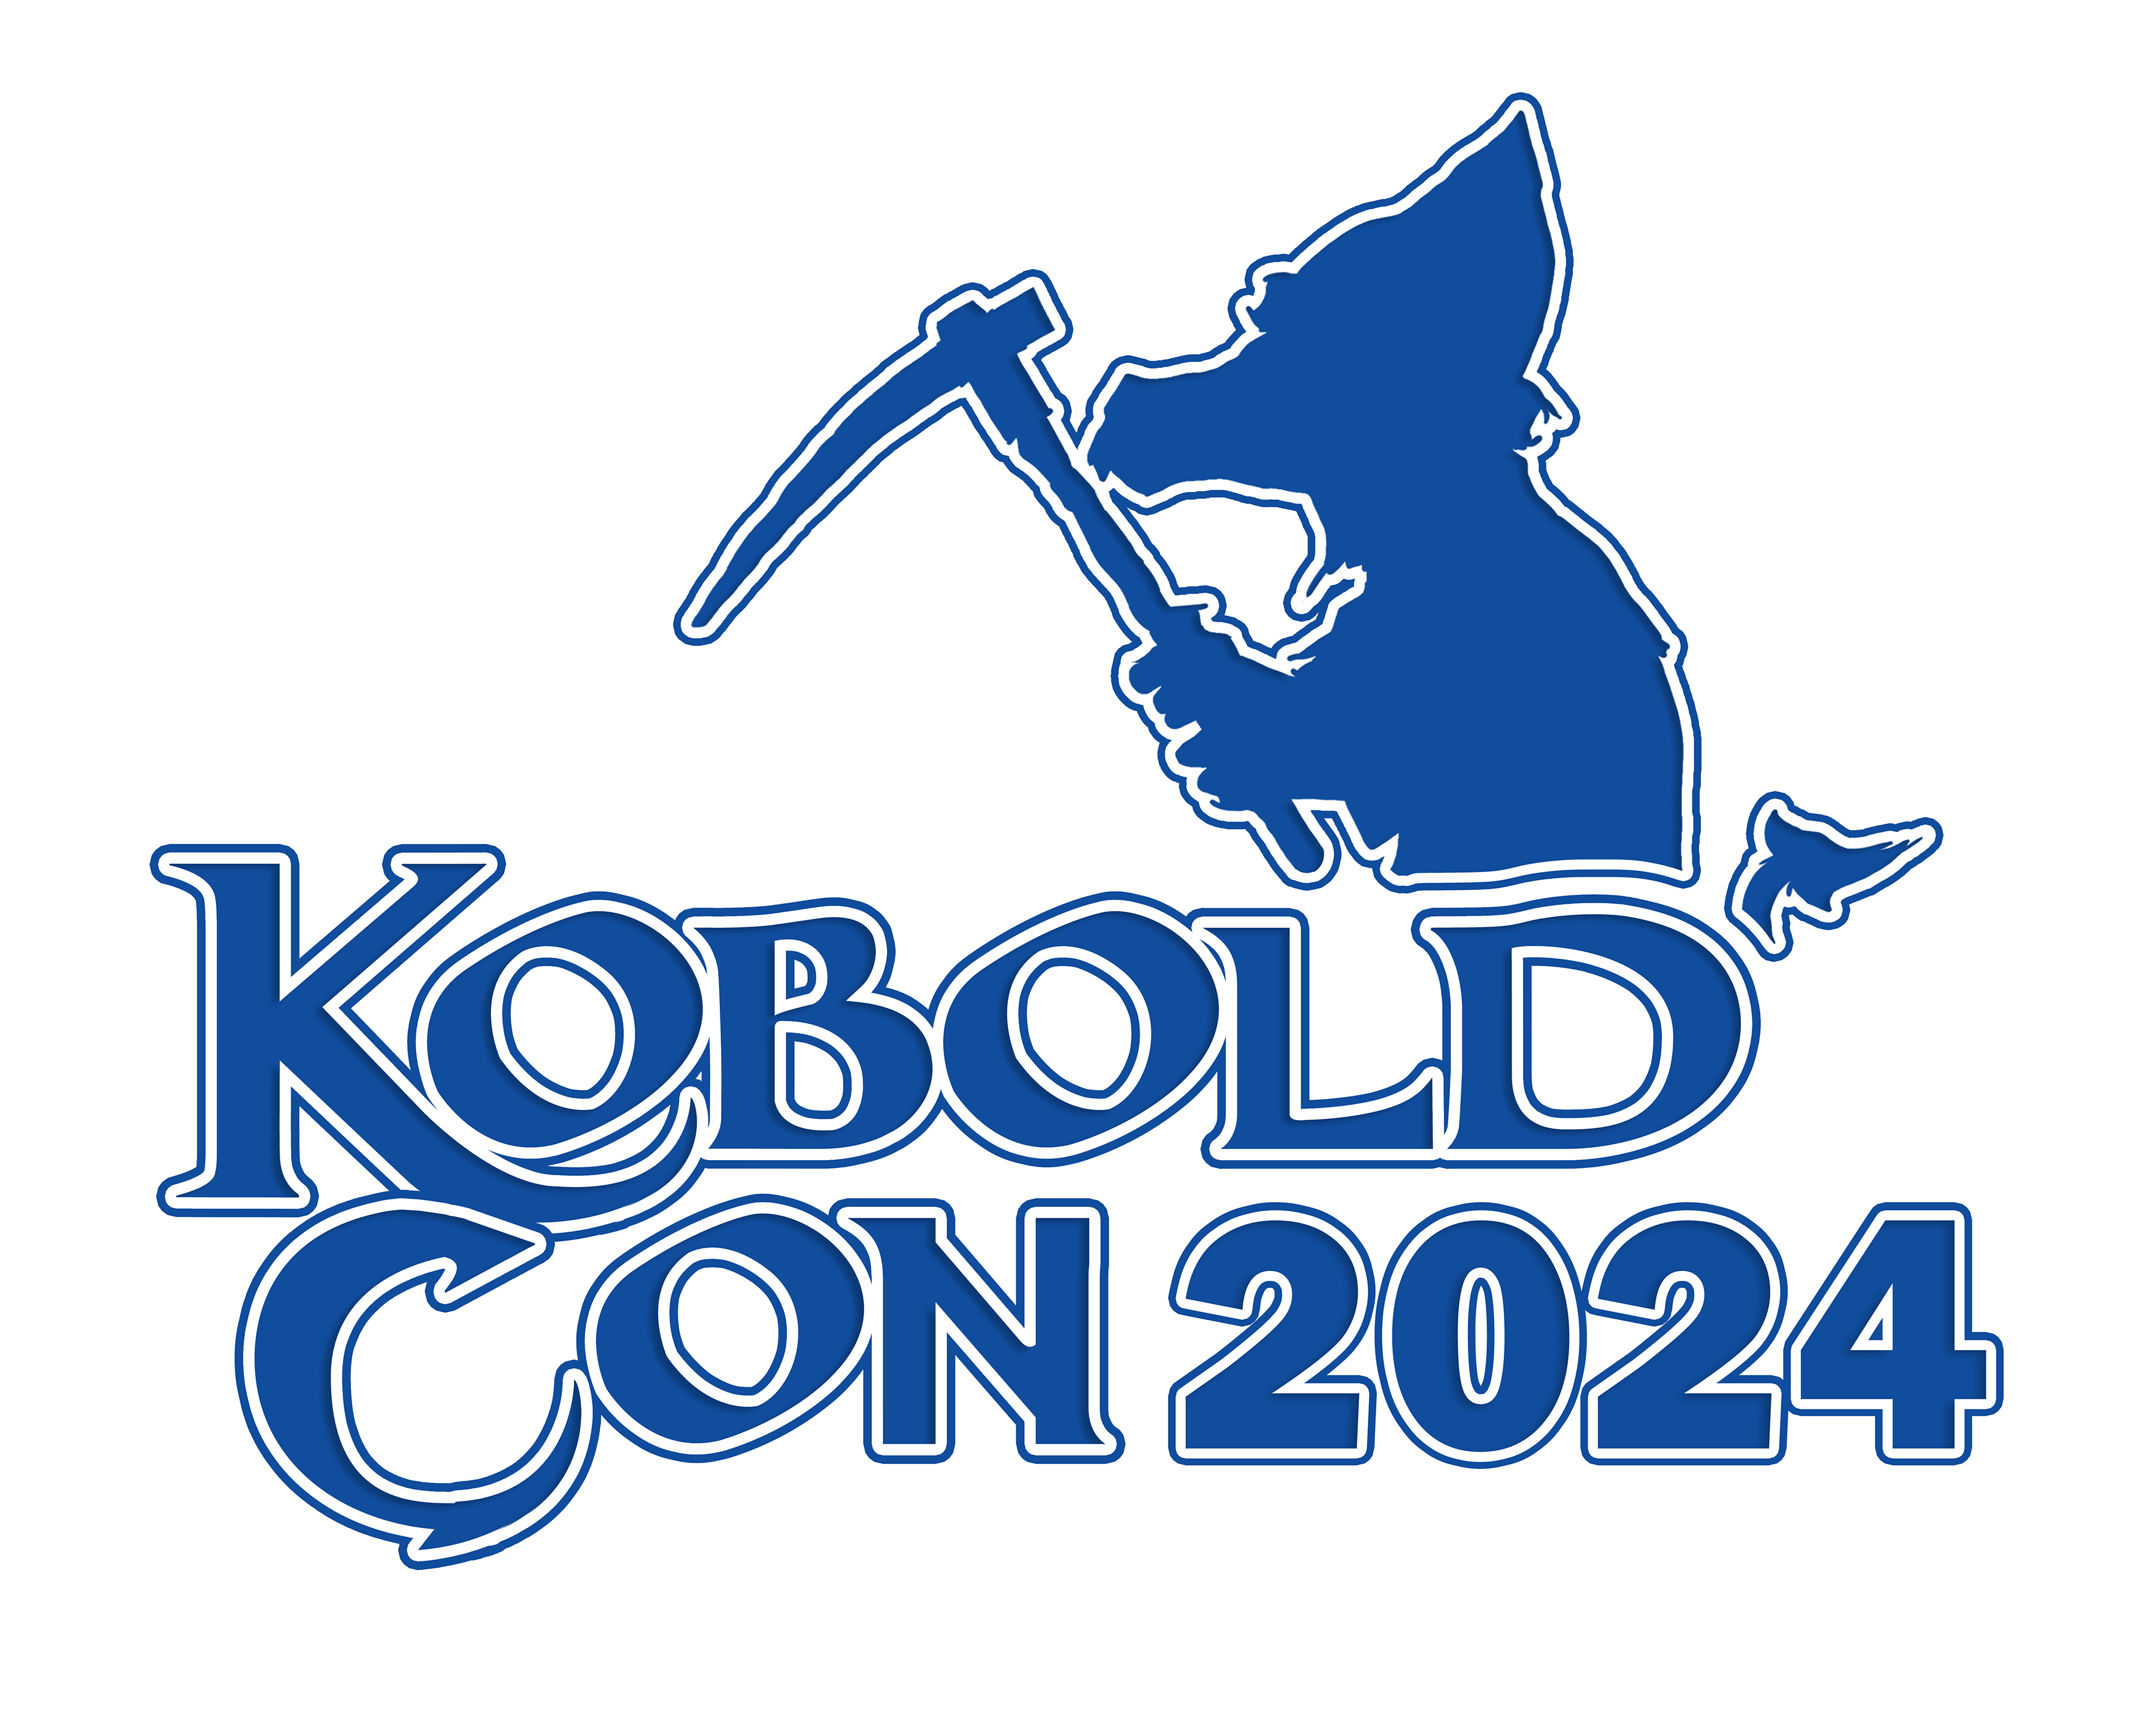 KoboldCon logo New.jpg